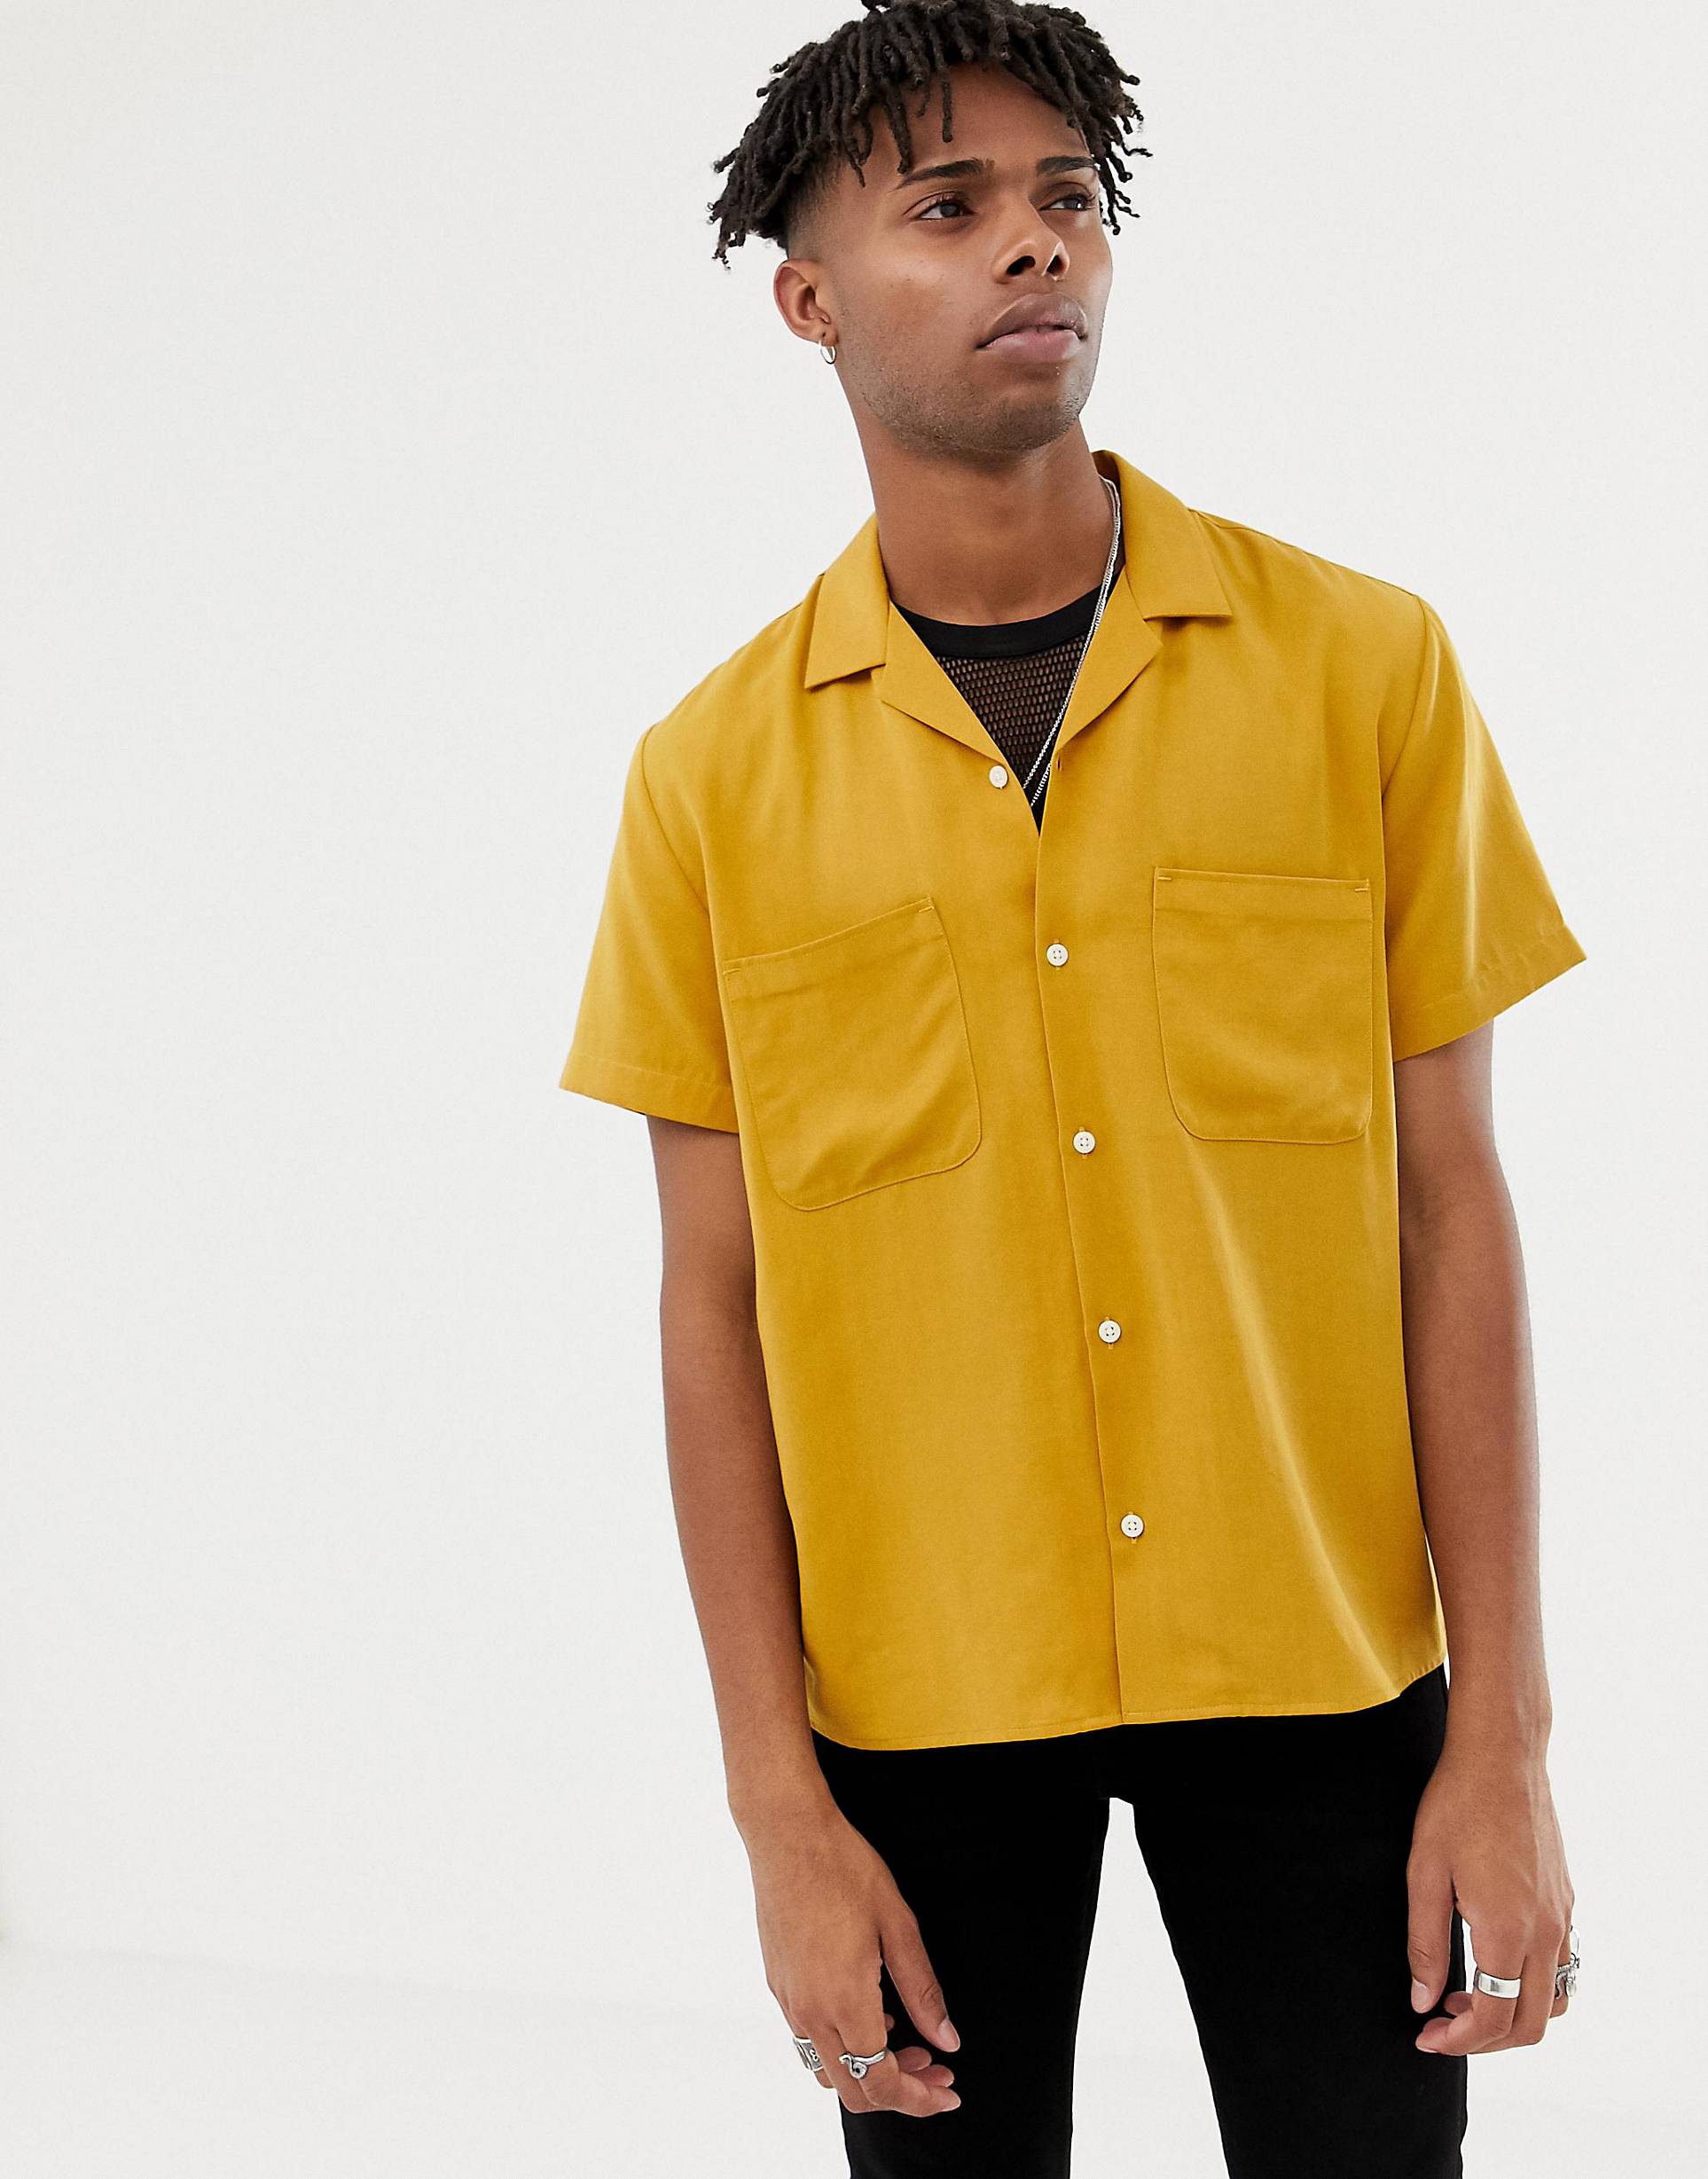 Горчичная рубашка. Рубашка горчичного цвета. Рубашка горчичного цвета мужская. Желтая рубашка из вискозы.